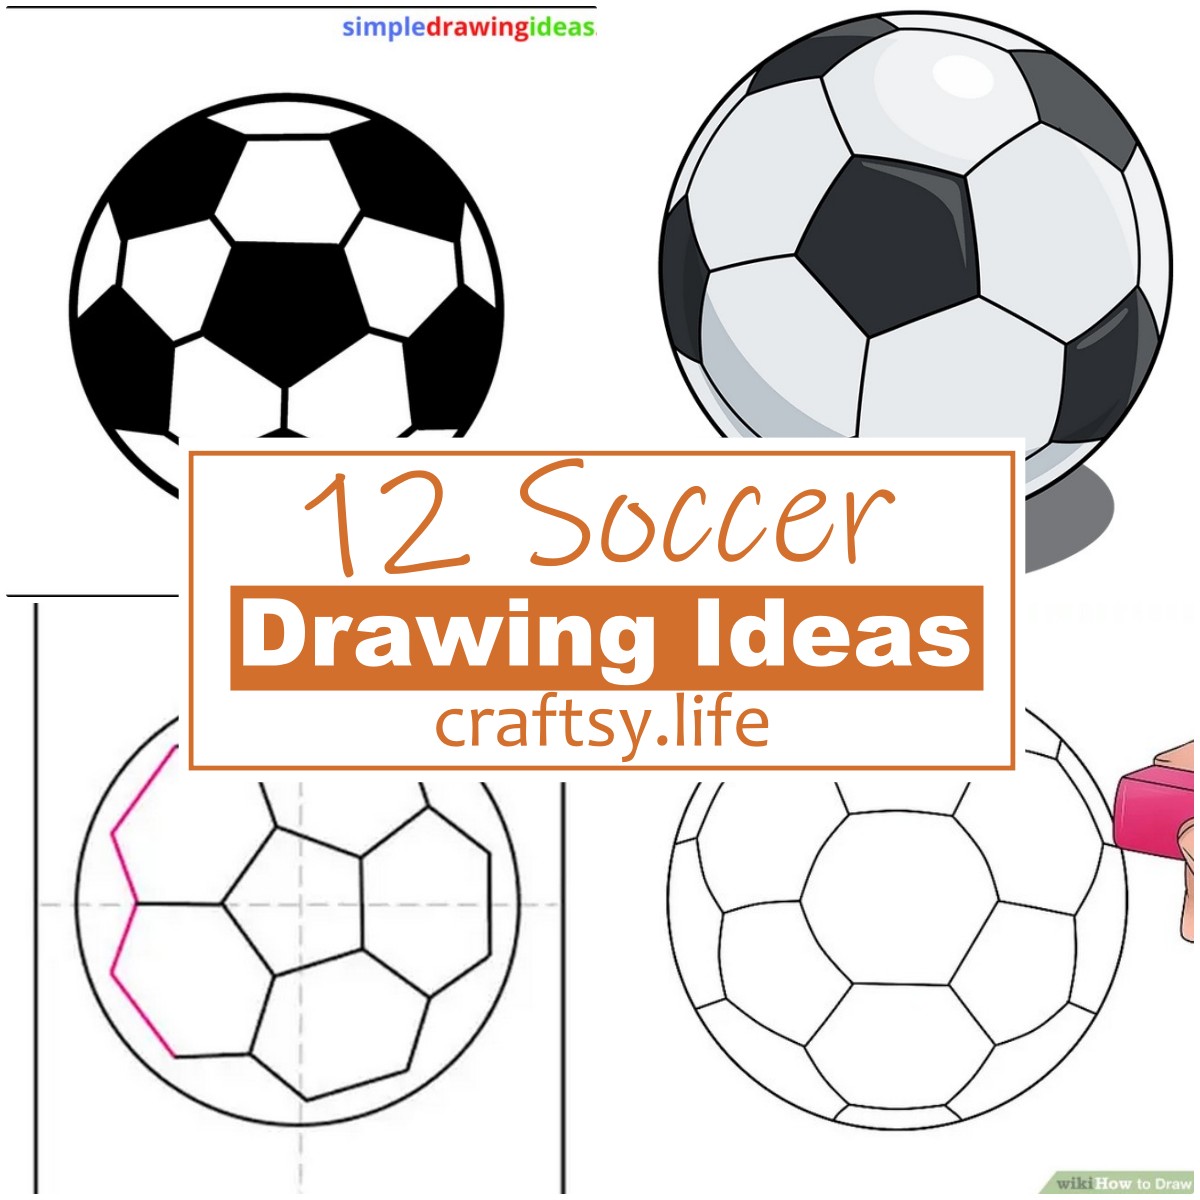 12 Soccer Drawing Ideas